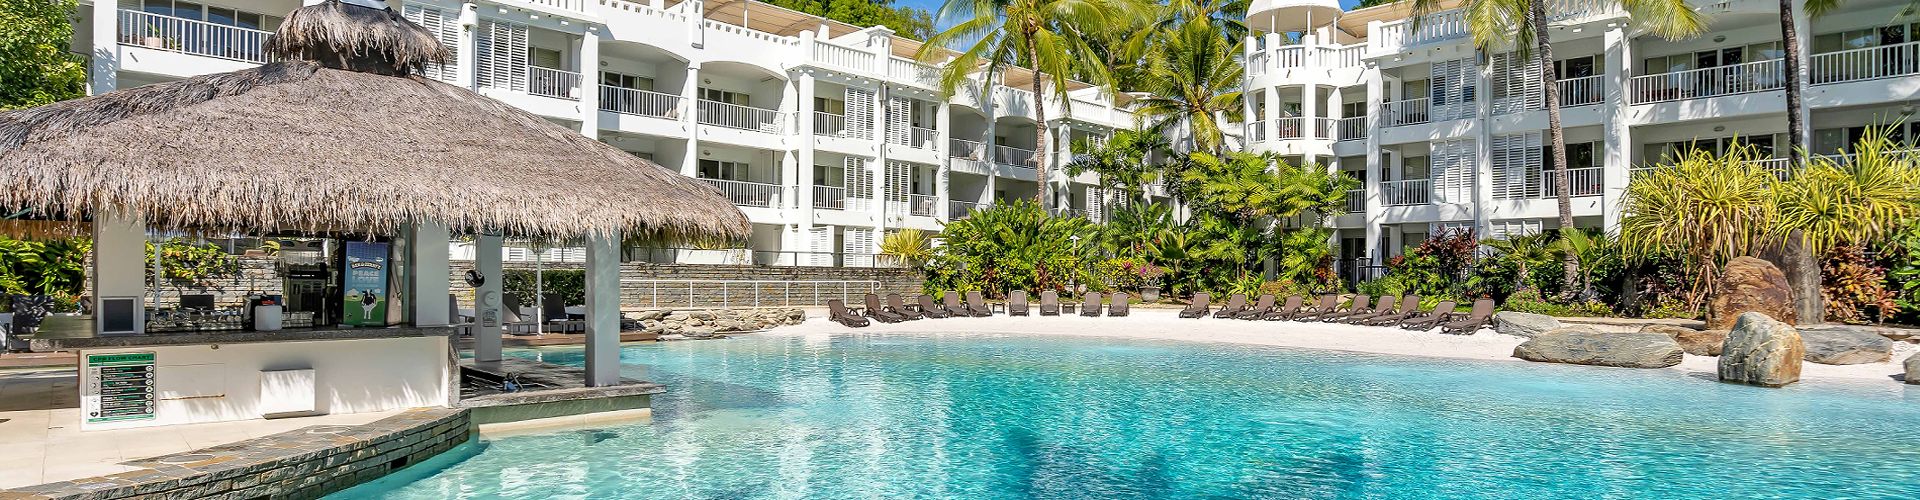 Palm Cove Cairns Holiday Apartment The Beach Club